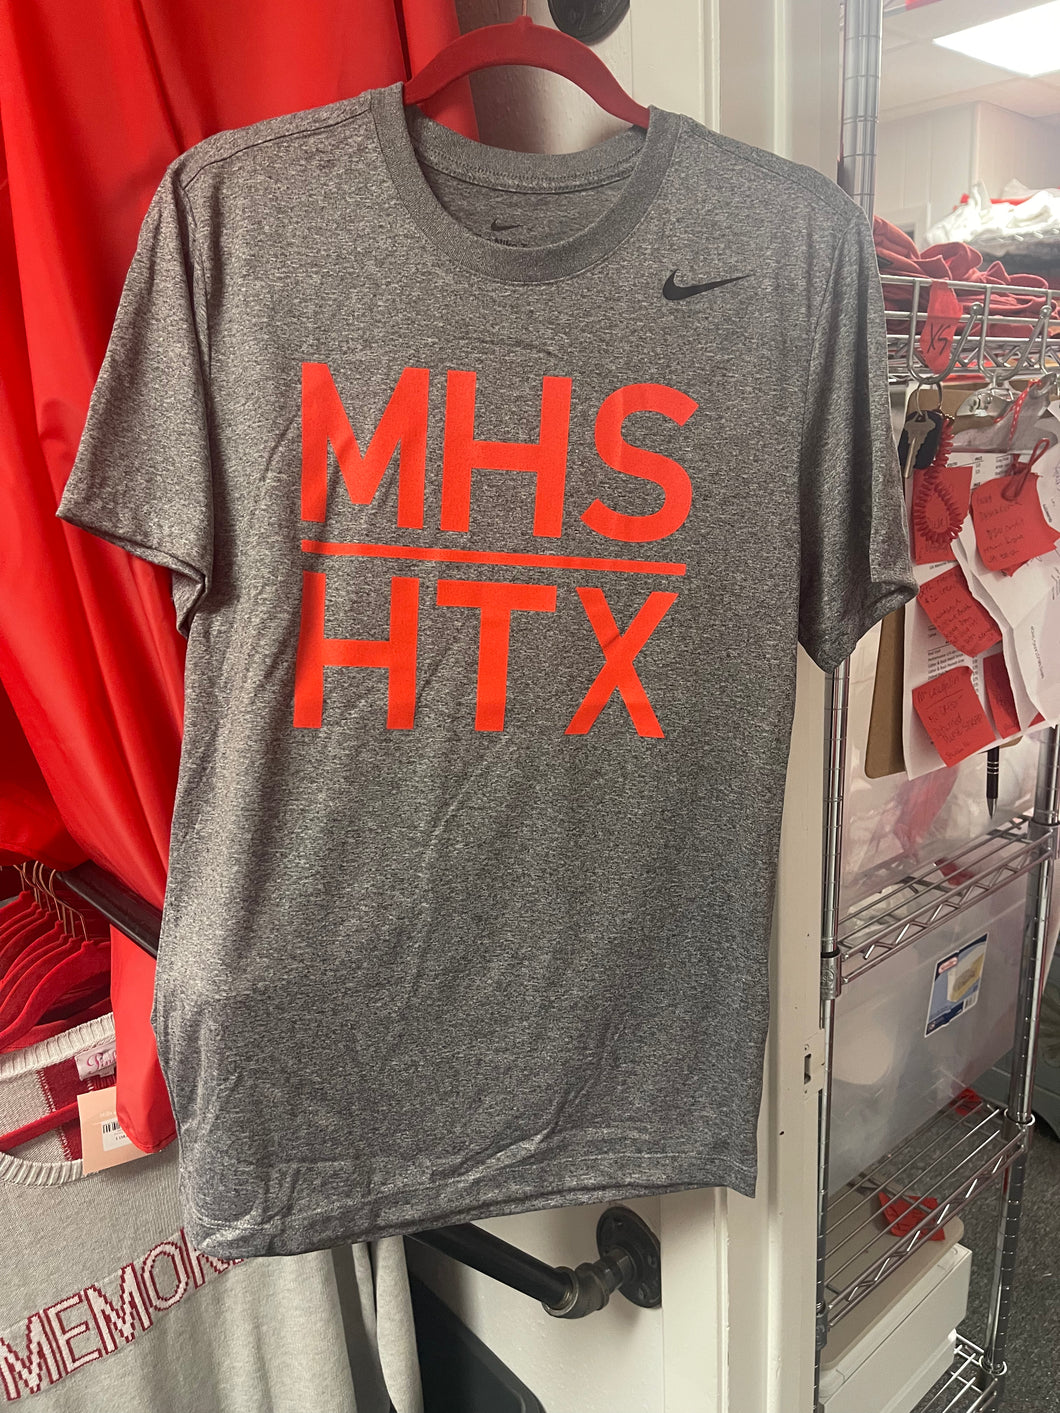 Nike MHS HTX